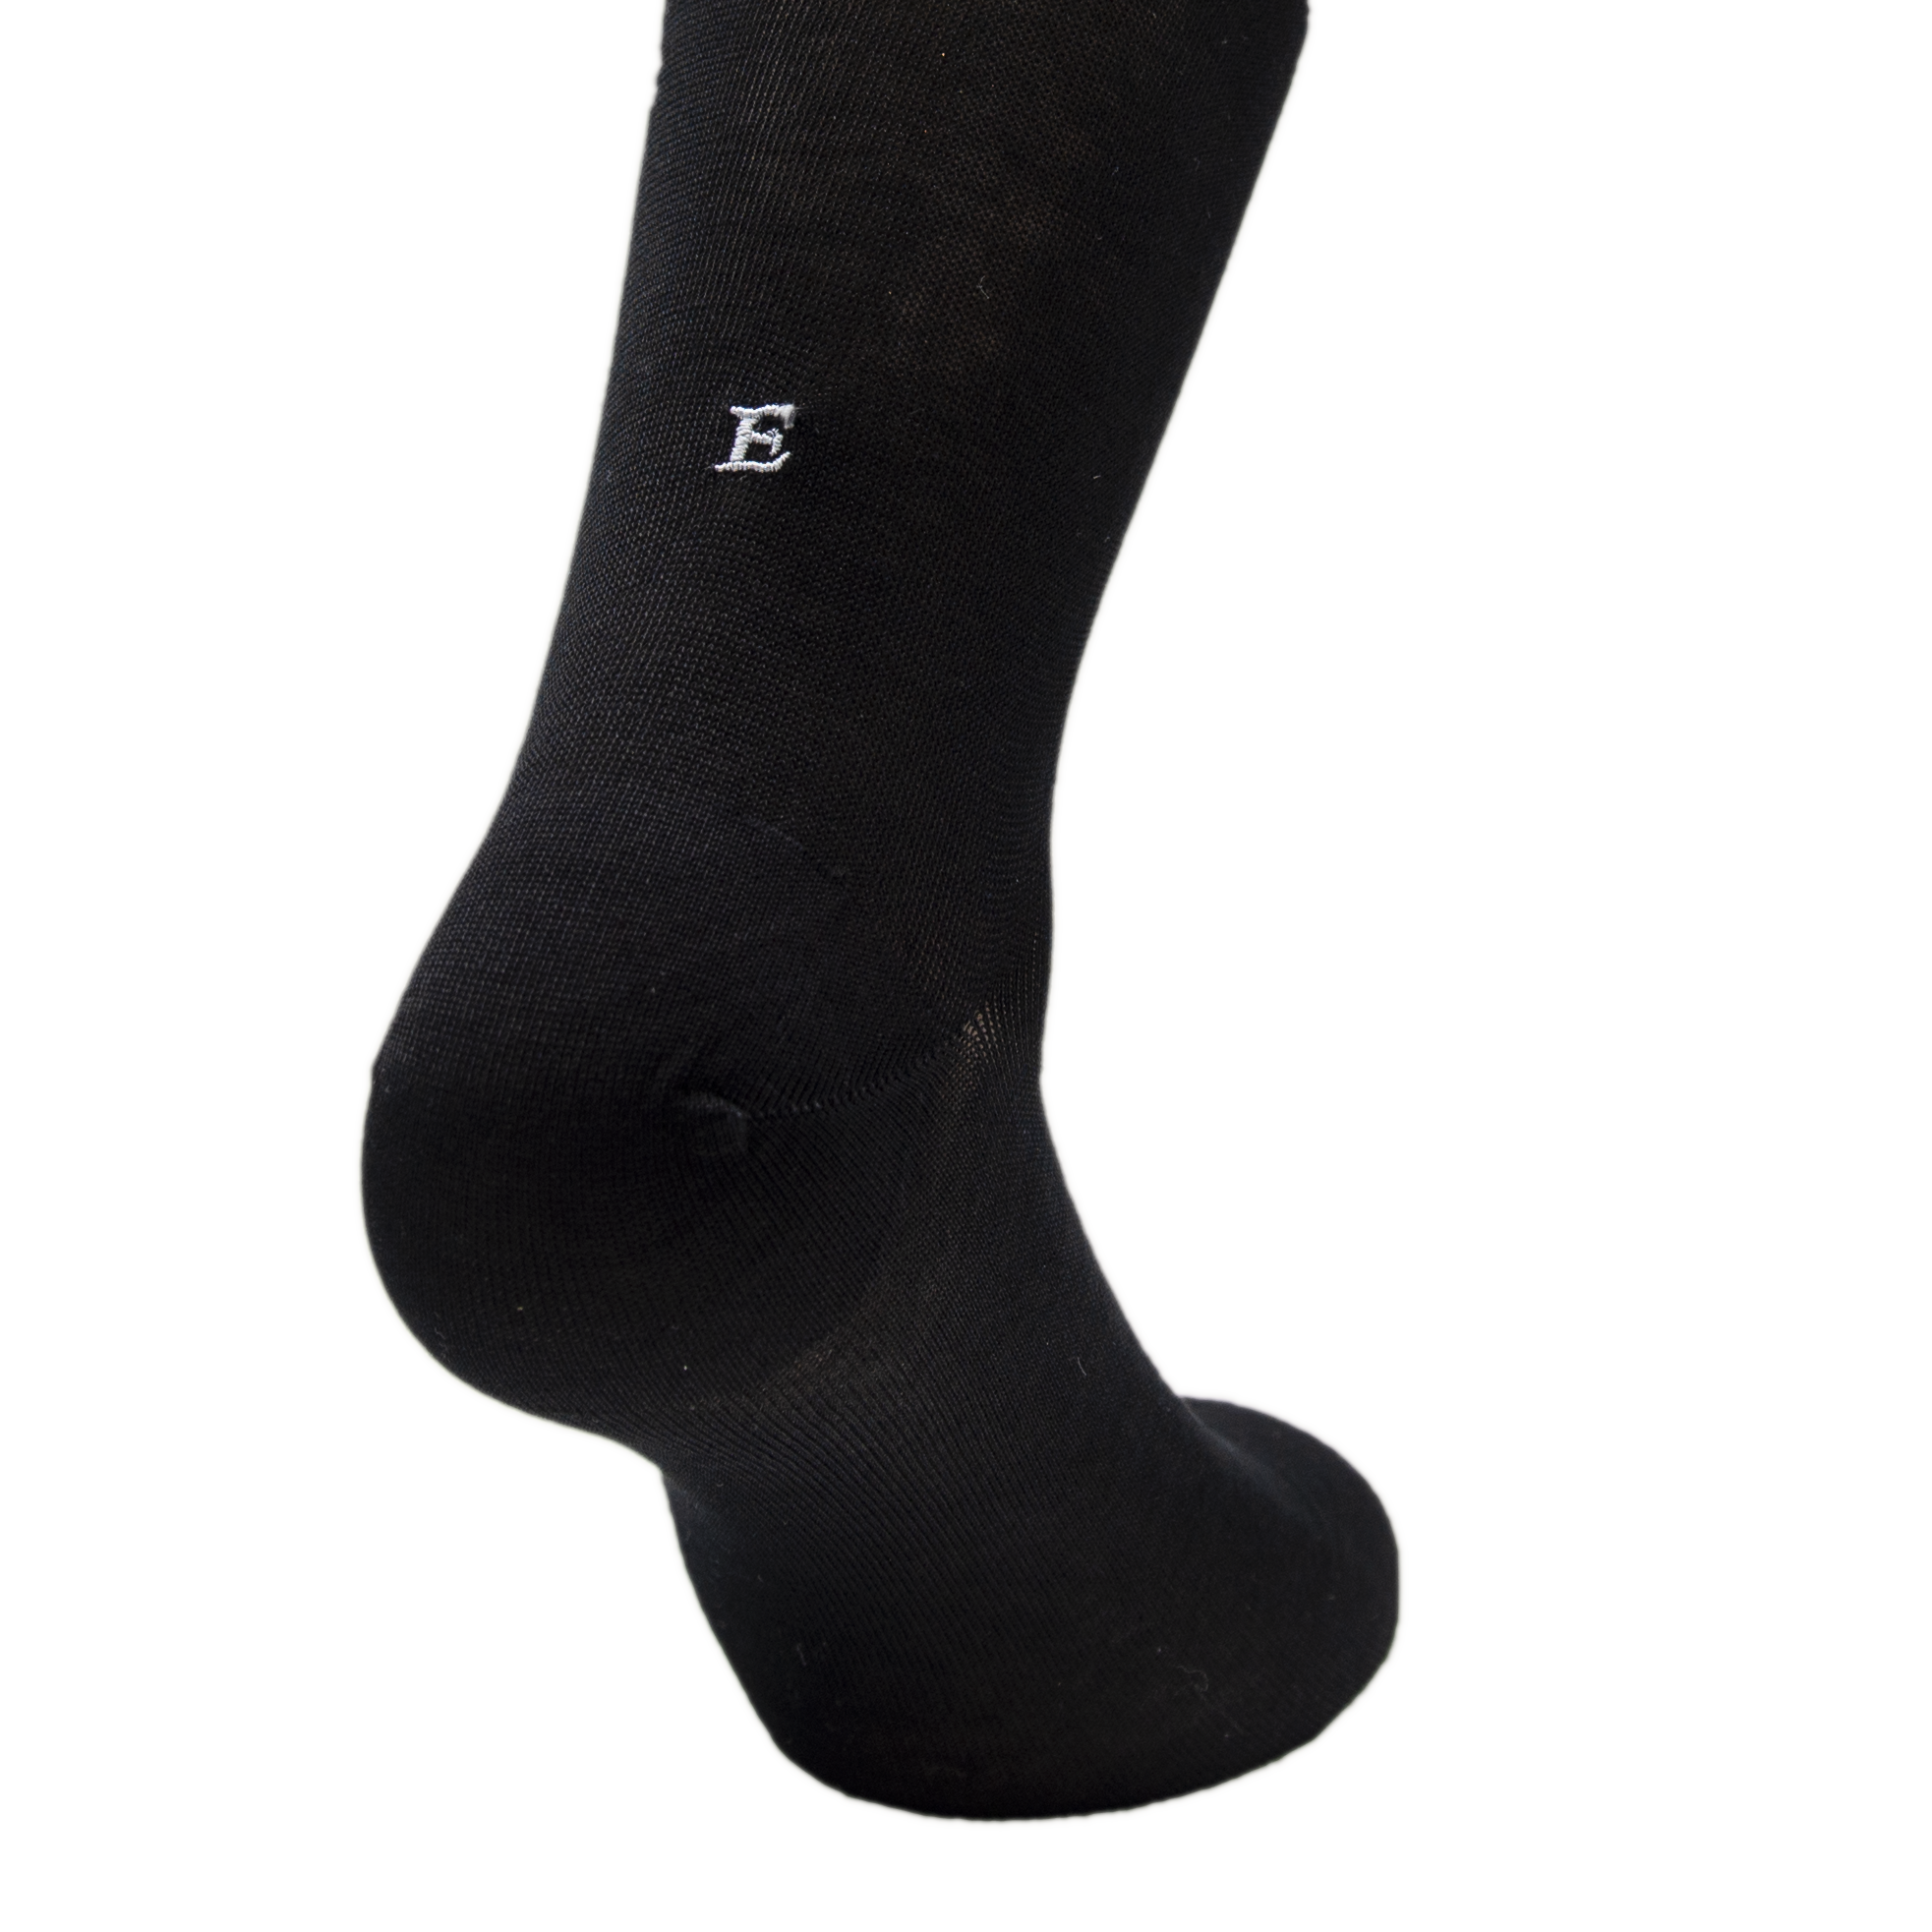 Black Men's Socks with Grey Initials - Filo di scozia Super light Stretch - Size 40/45 - 159